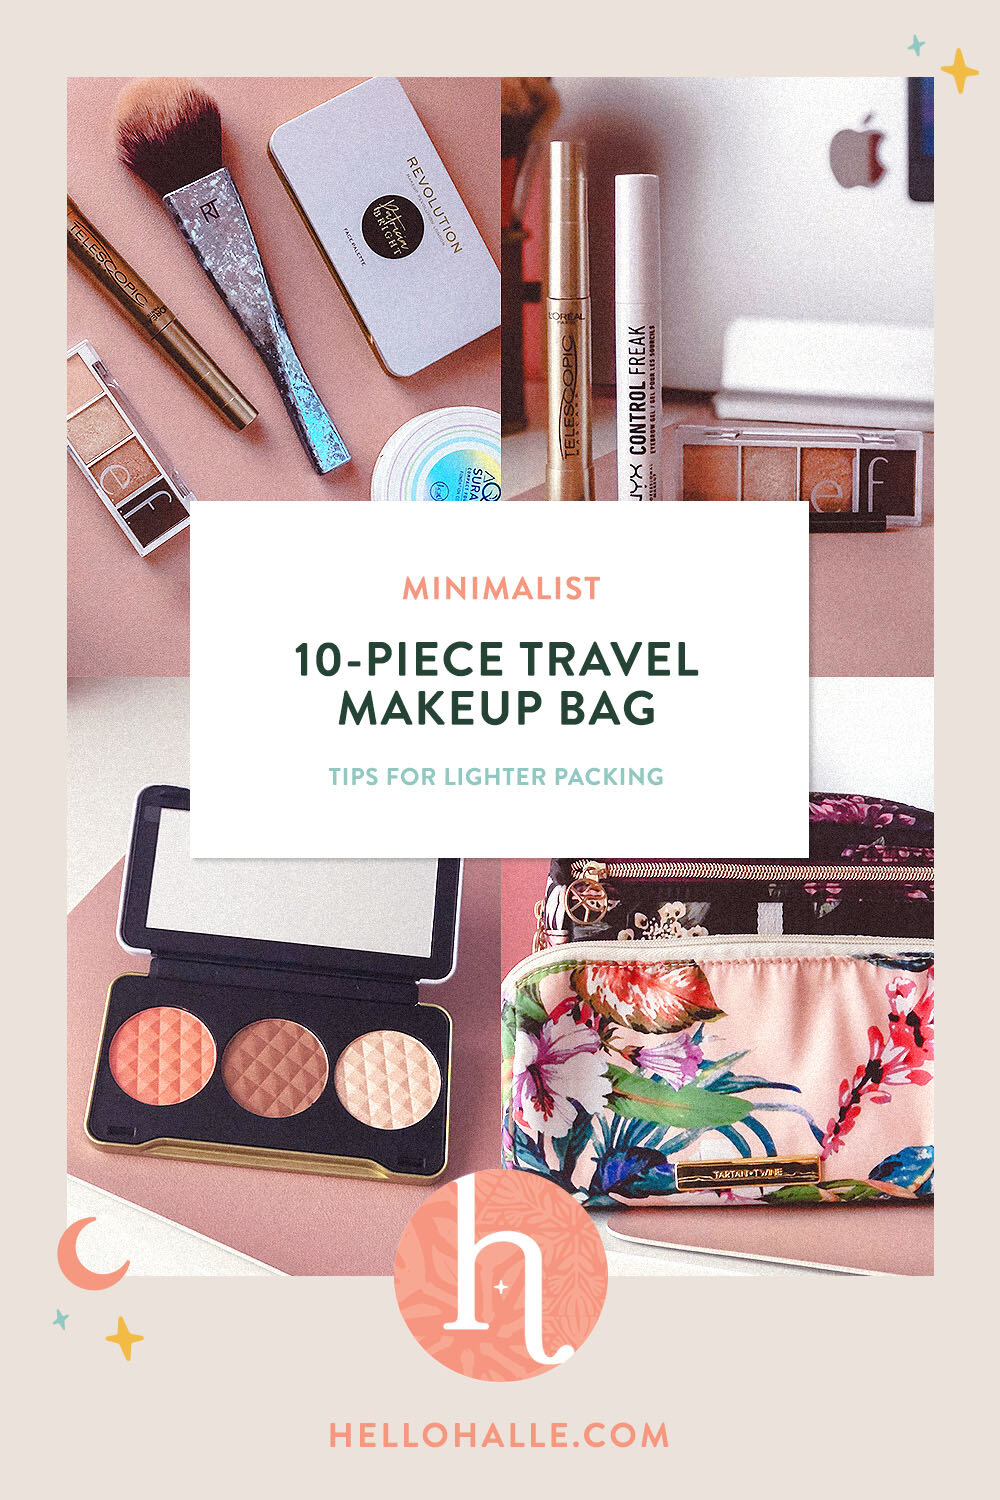 My Minimalist Travel Makeup Bag